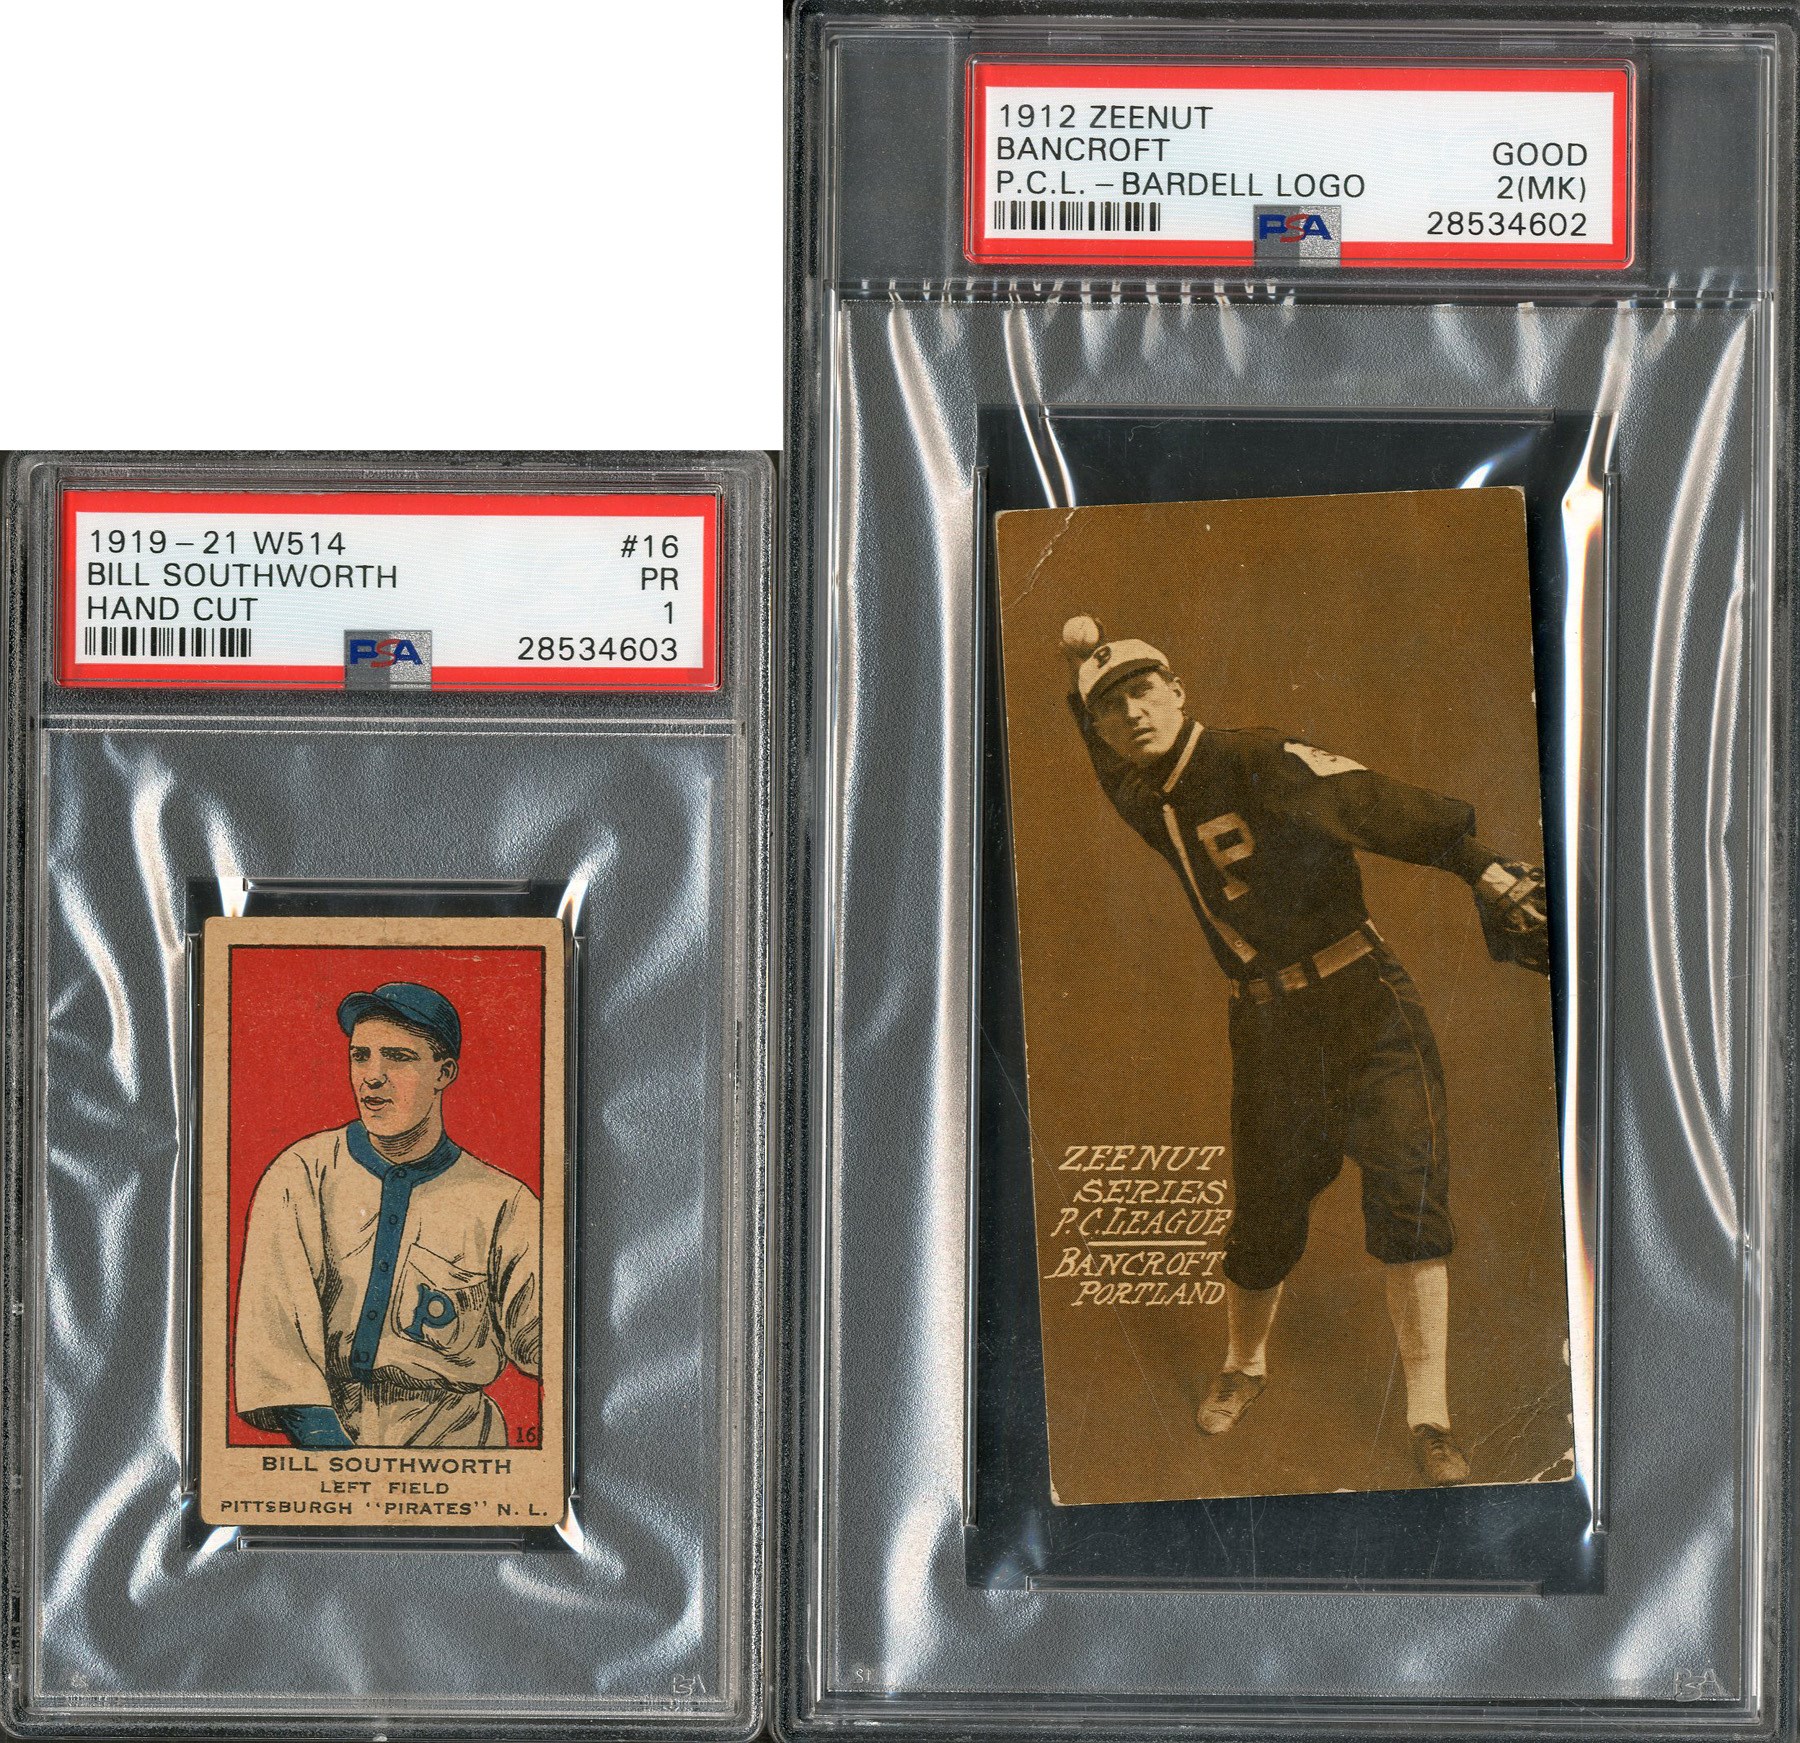 - 1912 Zeenut Dave Bancroft Rookie & 1919 W514 Bill Southworth (PSA Graded)